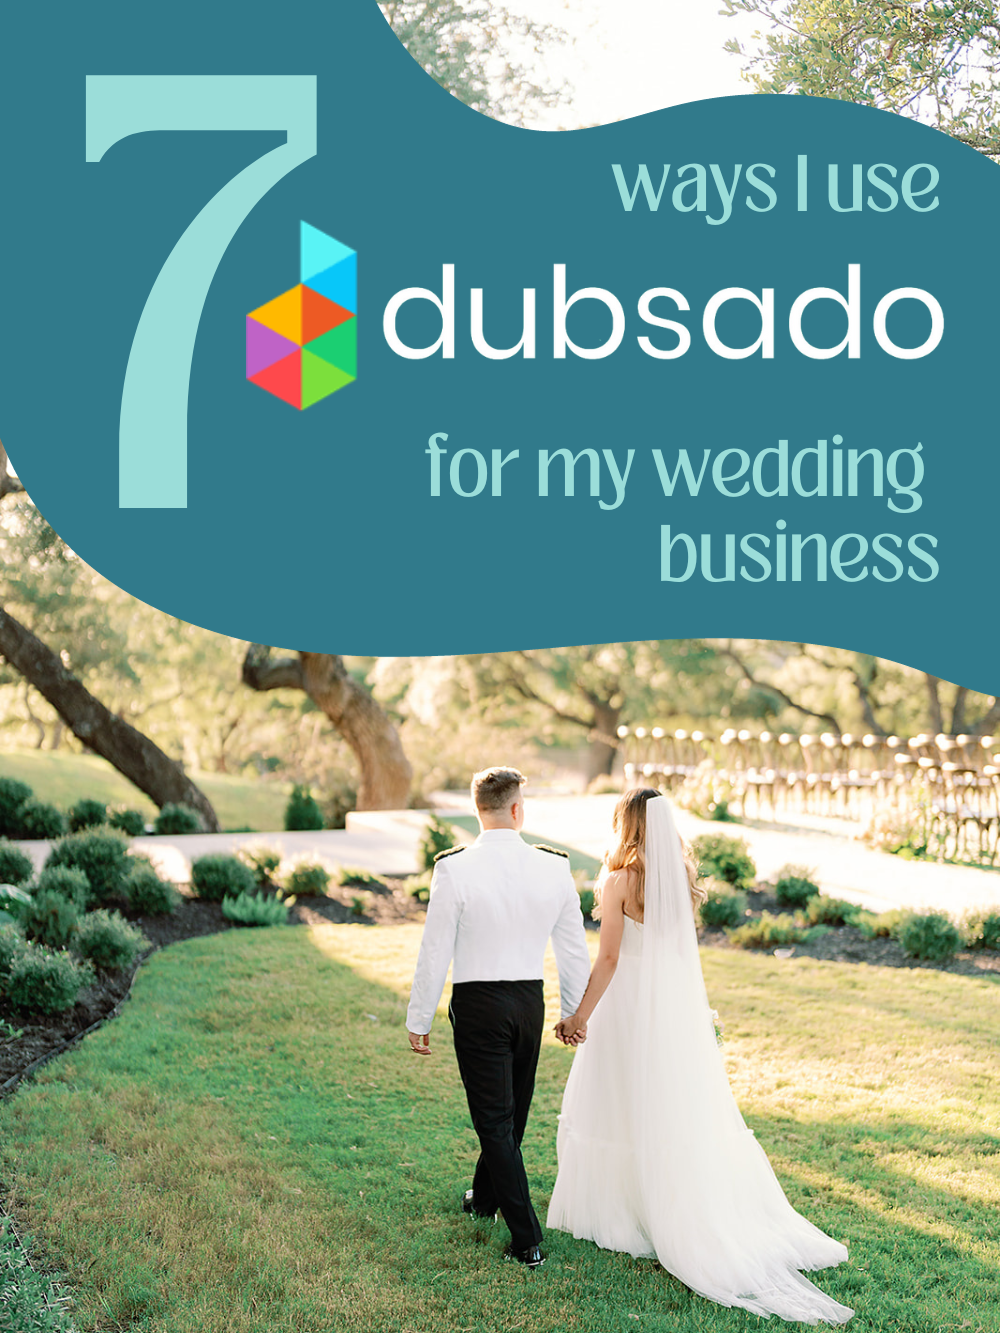 7 Ways I use Dubsado for my wedding business